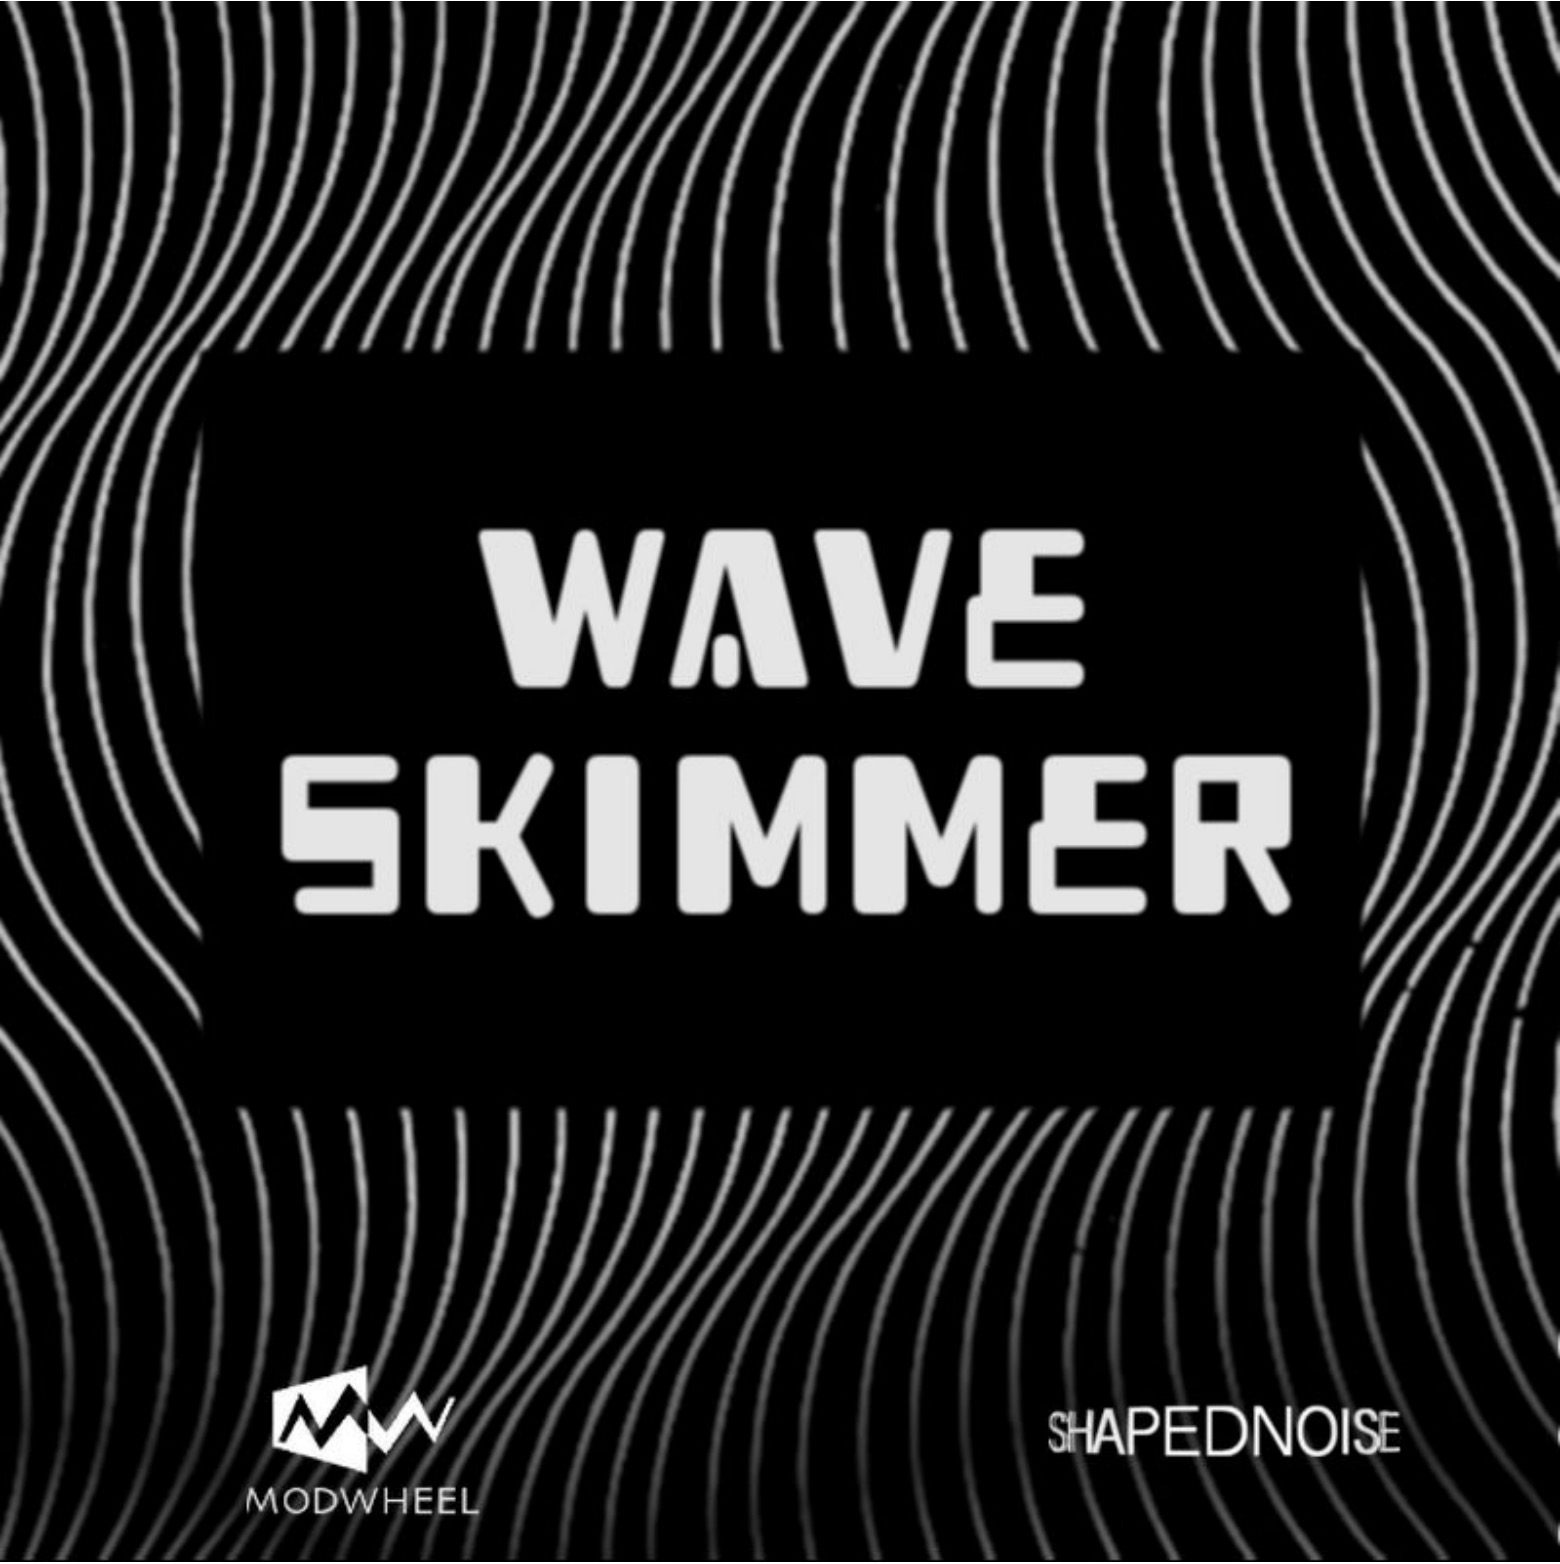 Waveskimmer by Modwheel Review